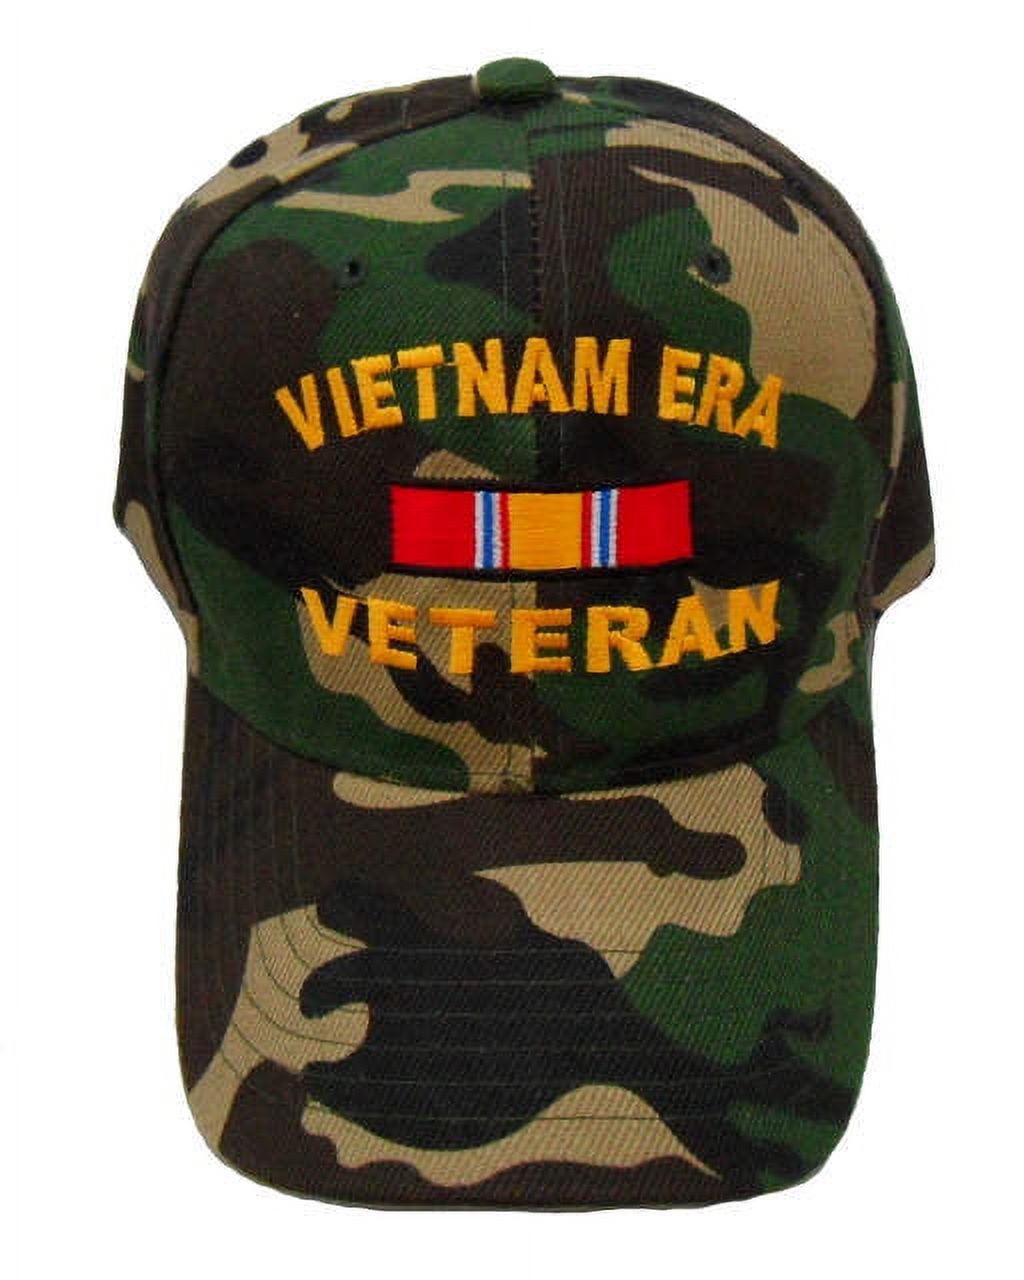 Vietnam ERA Veteran Camouflage Baseball Cap Camo Hunting Hat Mens Army Navy Marine Air Force - image 1 of 2